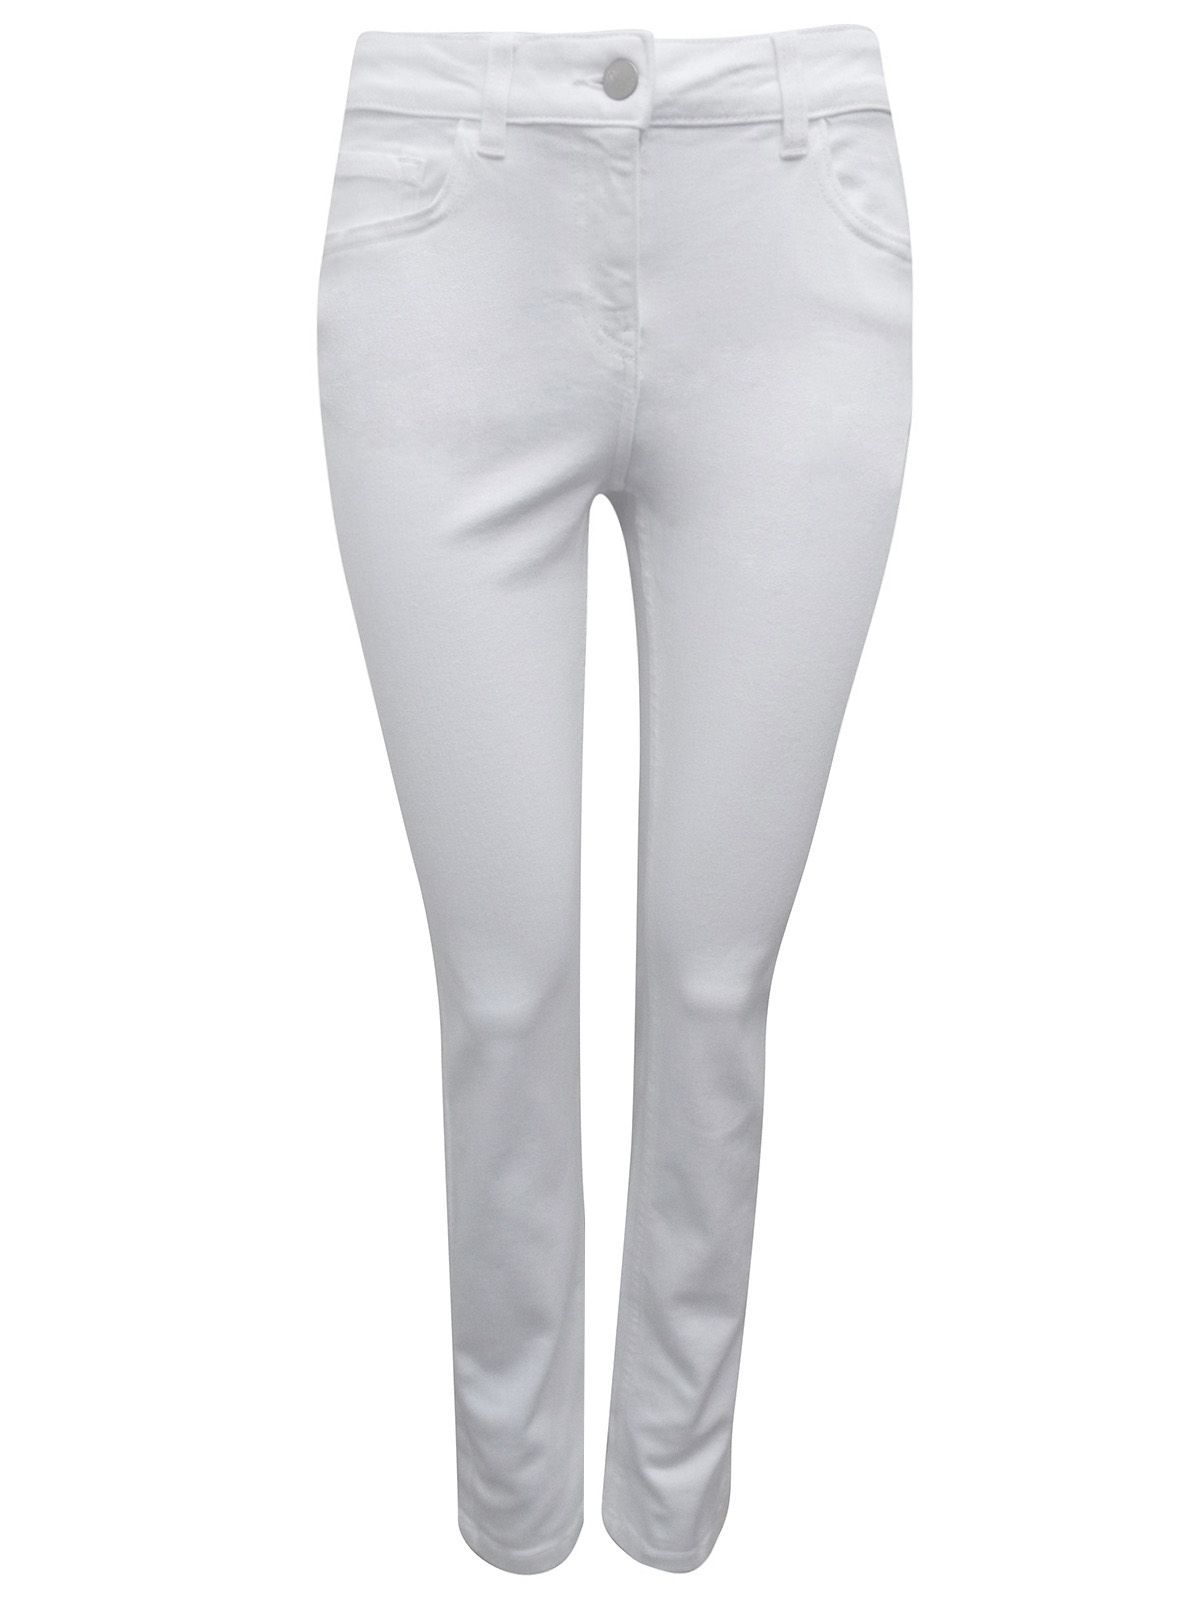 WHITE Mid Rise Slim Fit Cotton Rich Jeans - Size 8 to 26 (Leg 29